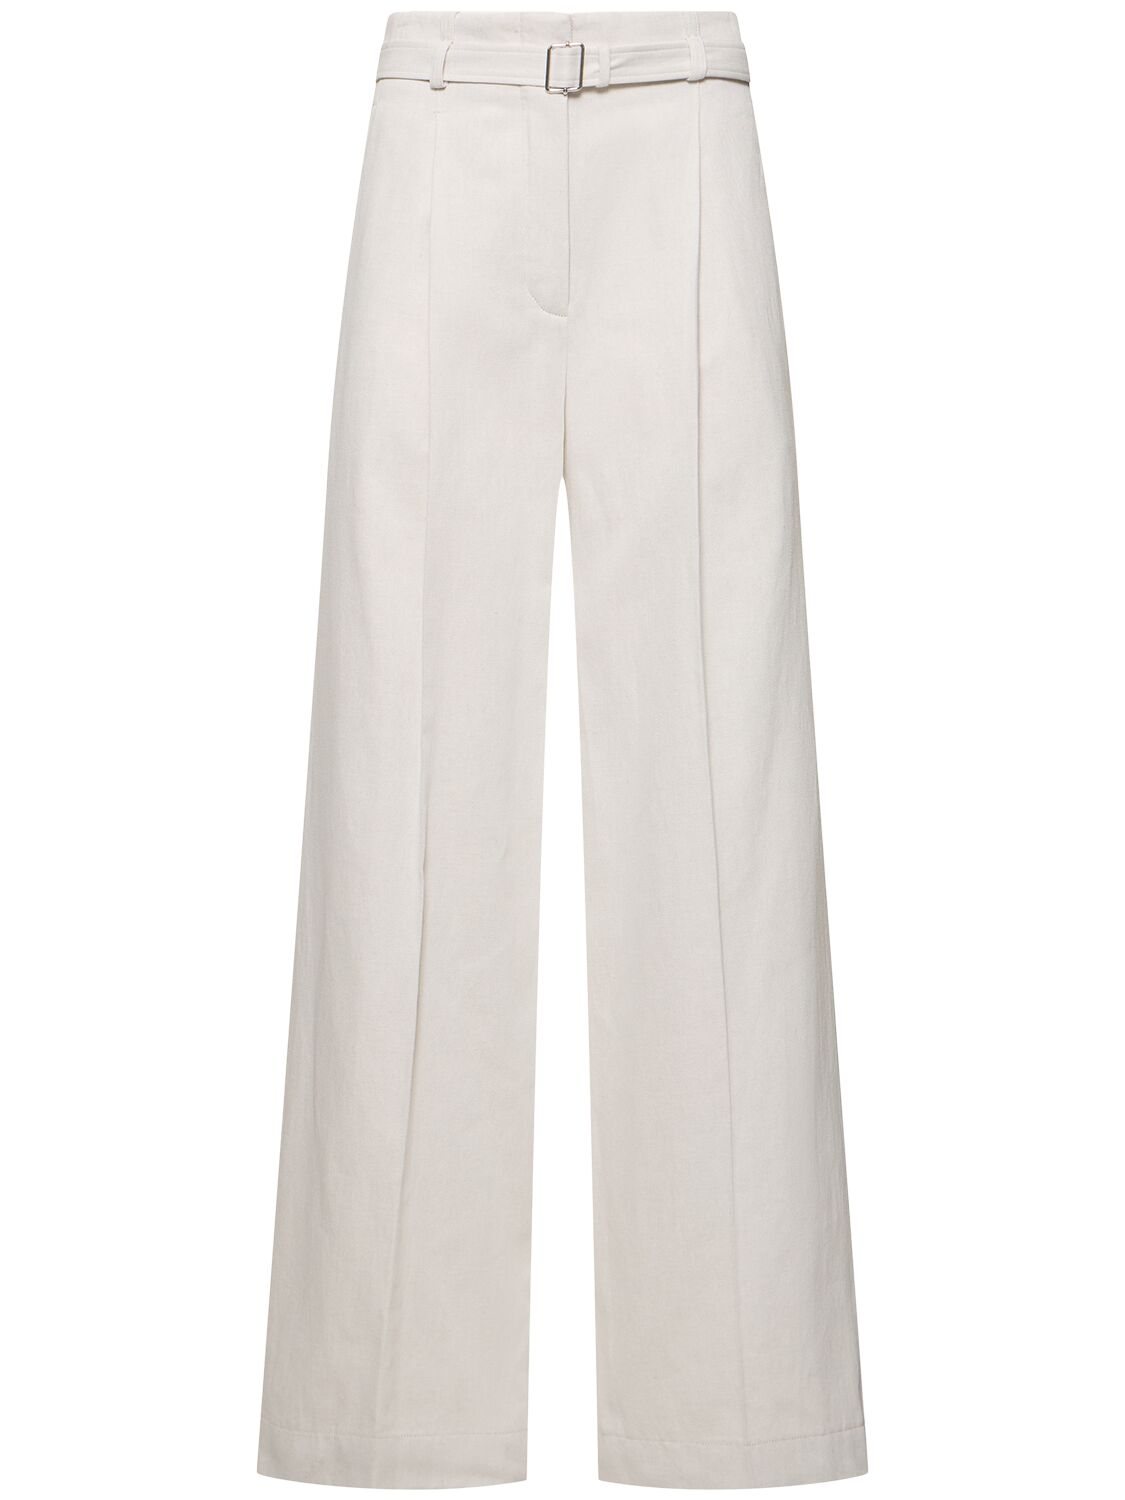 Dana Tailored Cotton & Linen Pants